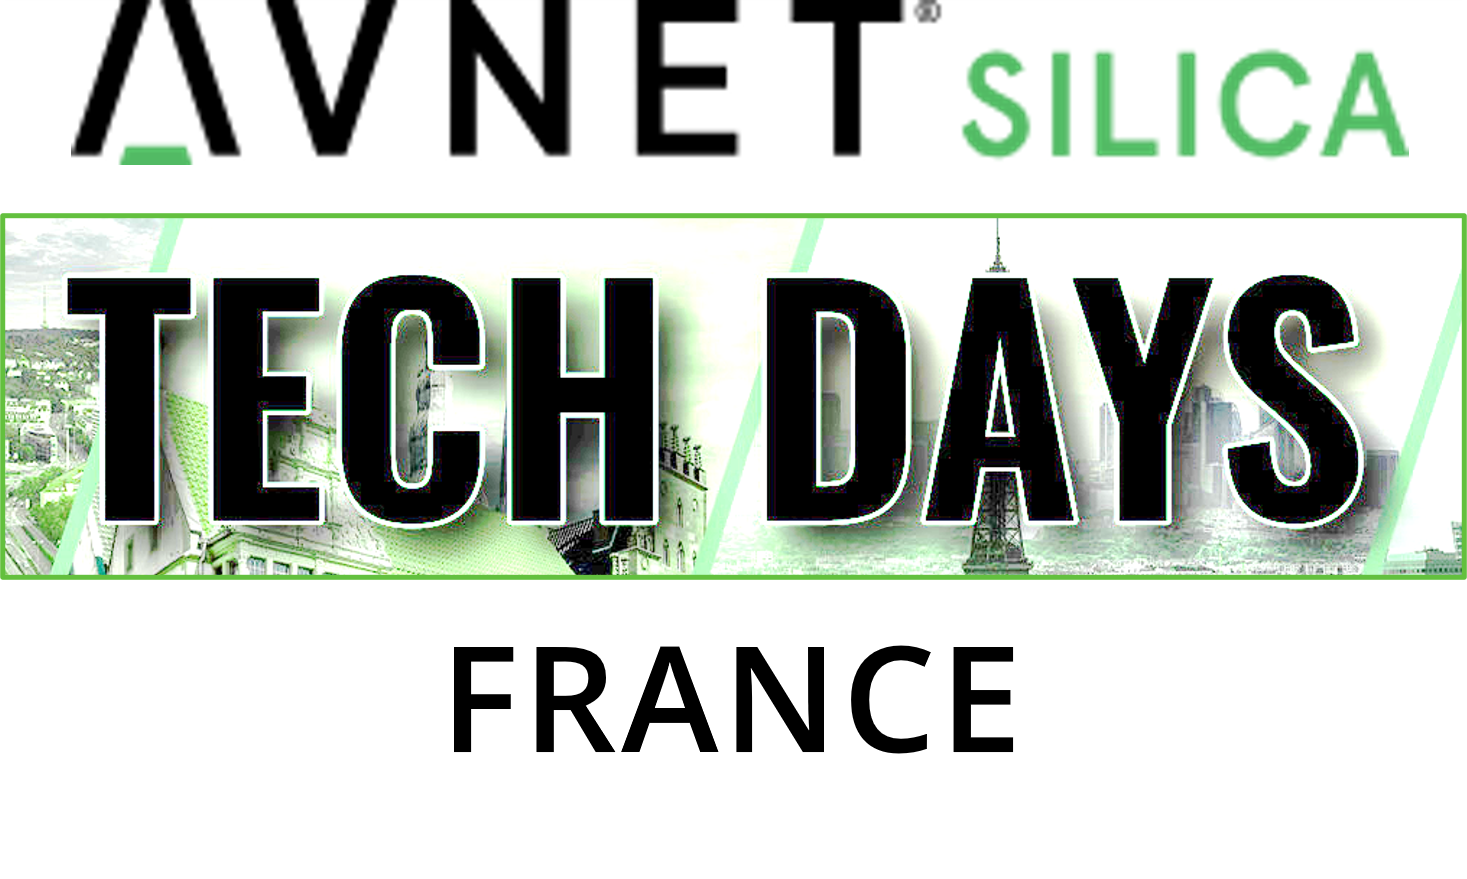 Avnet Silica Tech Day France